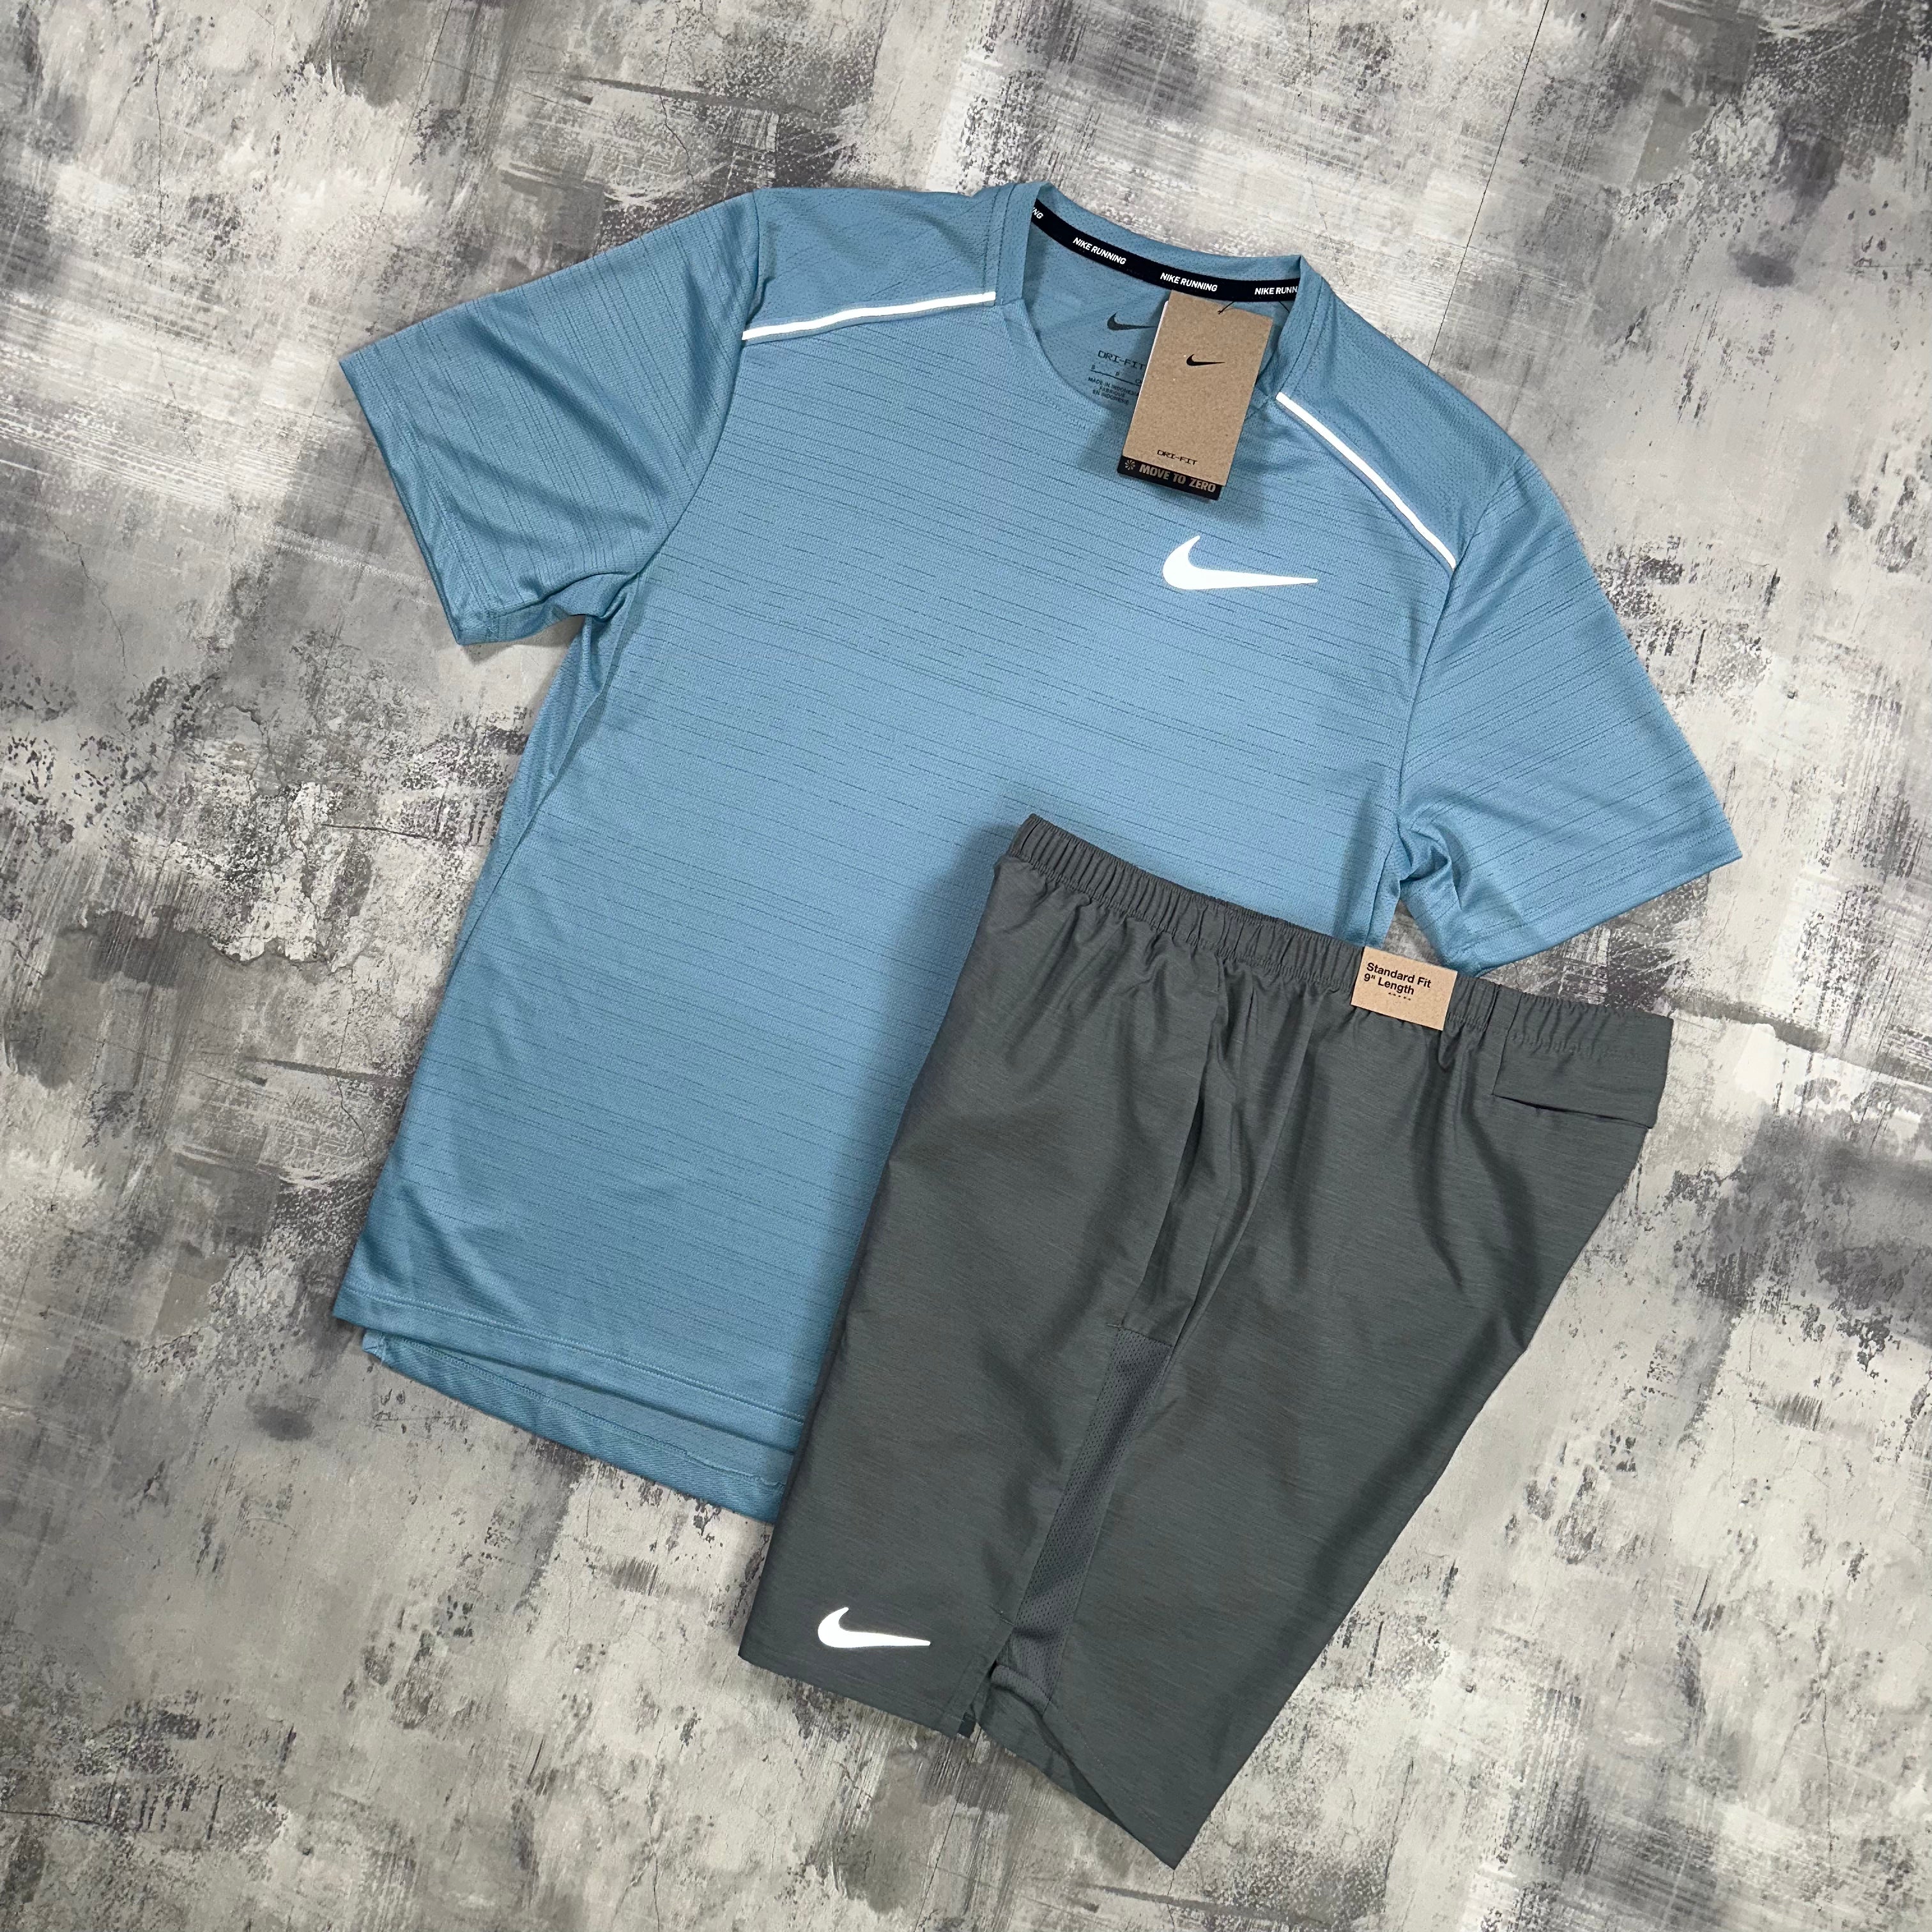 Nike Miler set Baltic Blue - t-shirt and shorts